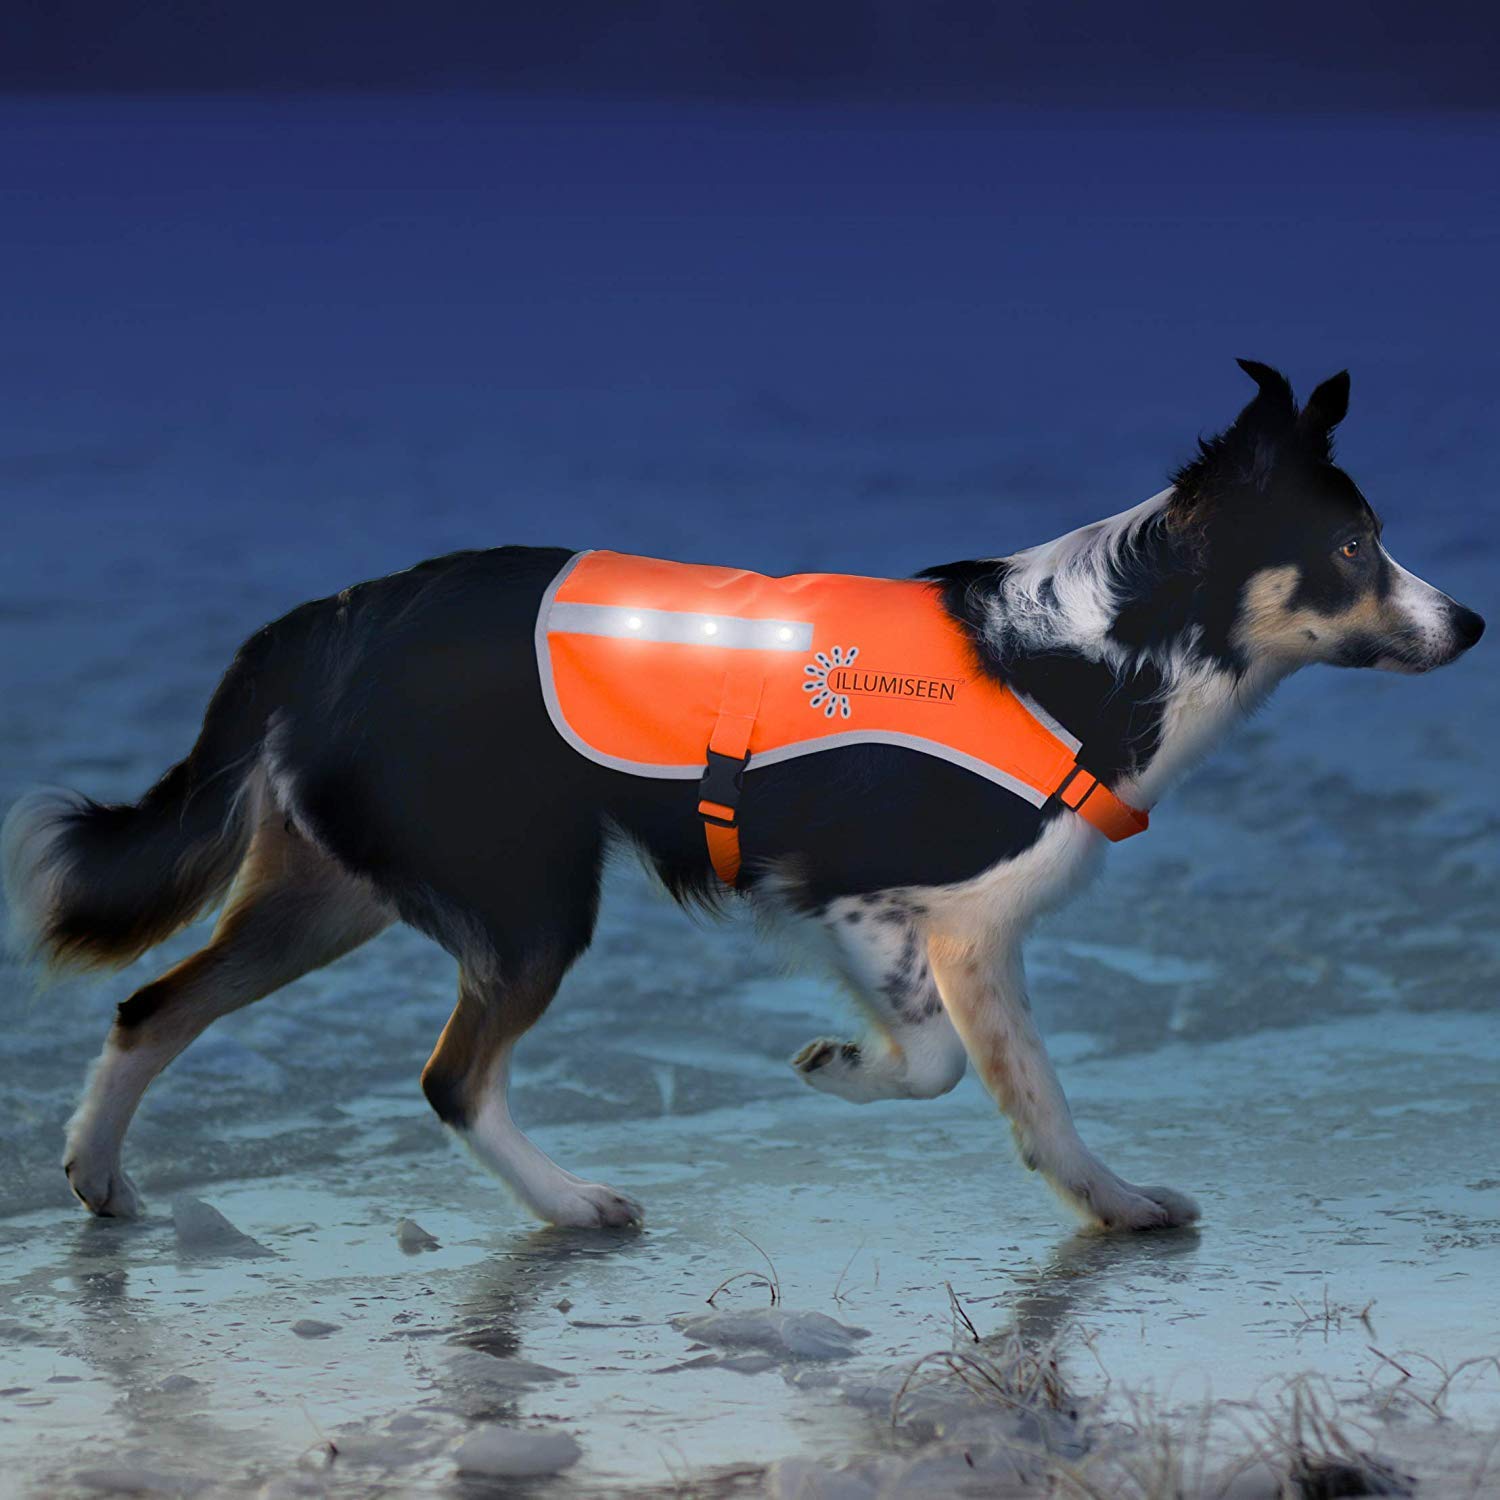 Illumiseen LED Dog Vest | Orange Safety Jacket with Reflective Strips & USB Rechargeable LED Lights | Increase Your Dog’s Visibility When Walking, 1